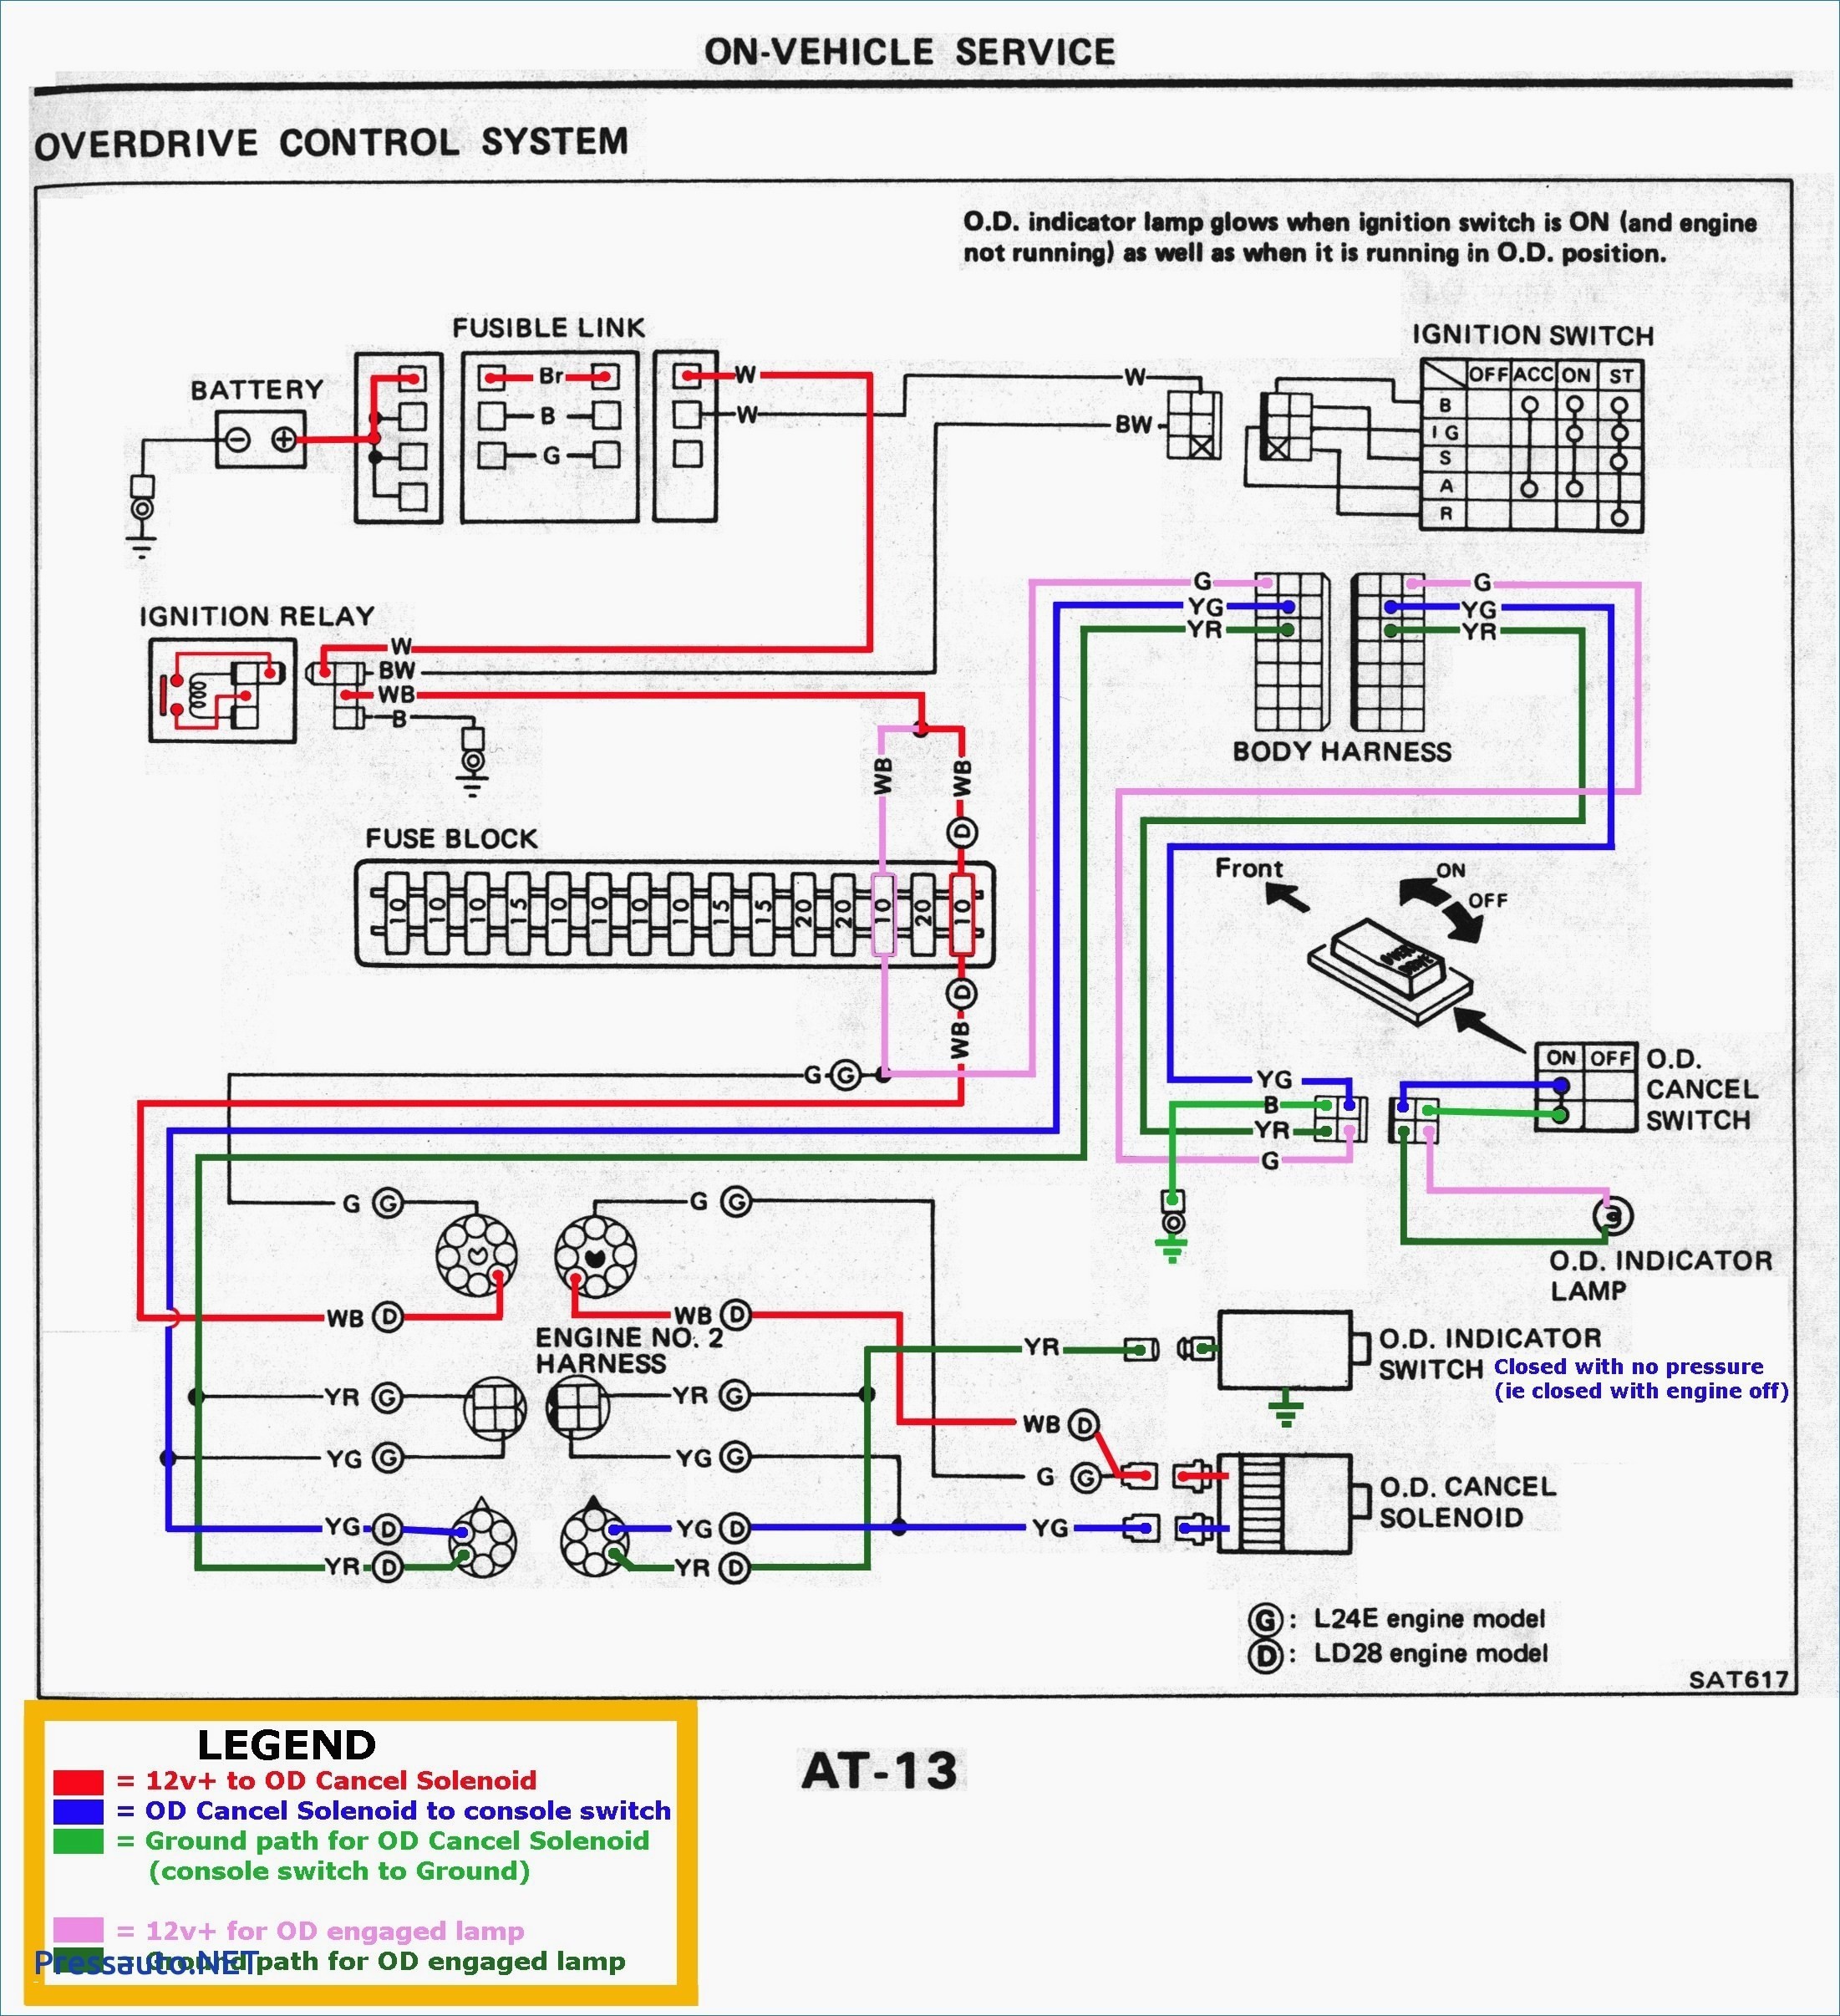 1996 ford Ranger Engine Diagram 2002 ford Explorer Ignition Wiring Diagram Reference 2002 ford Of 1996 ford Ranger Engine Diagram